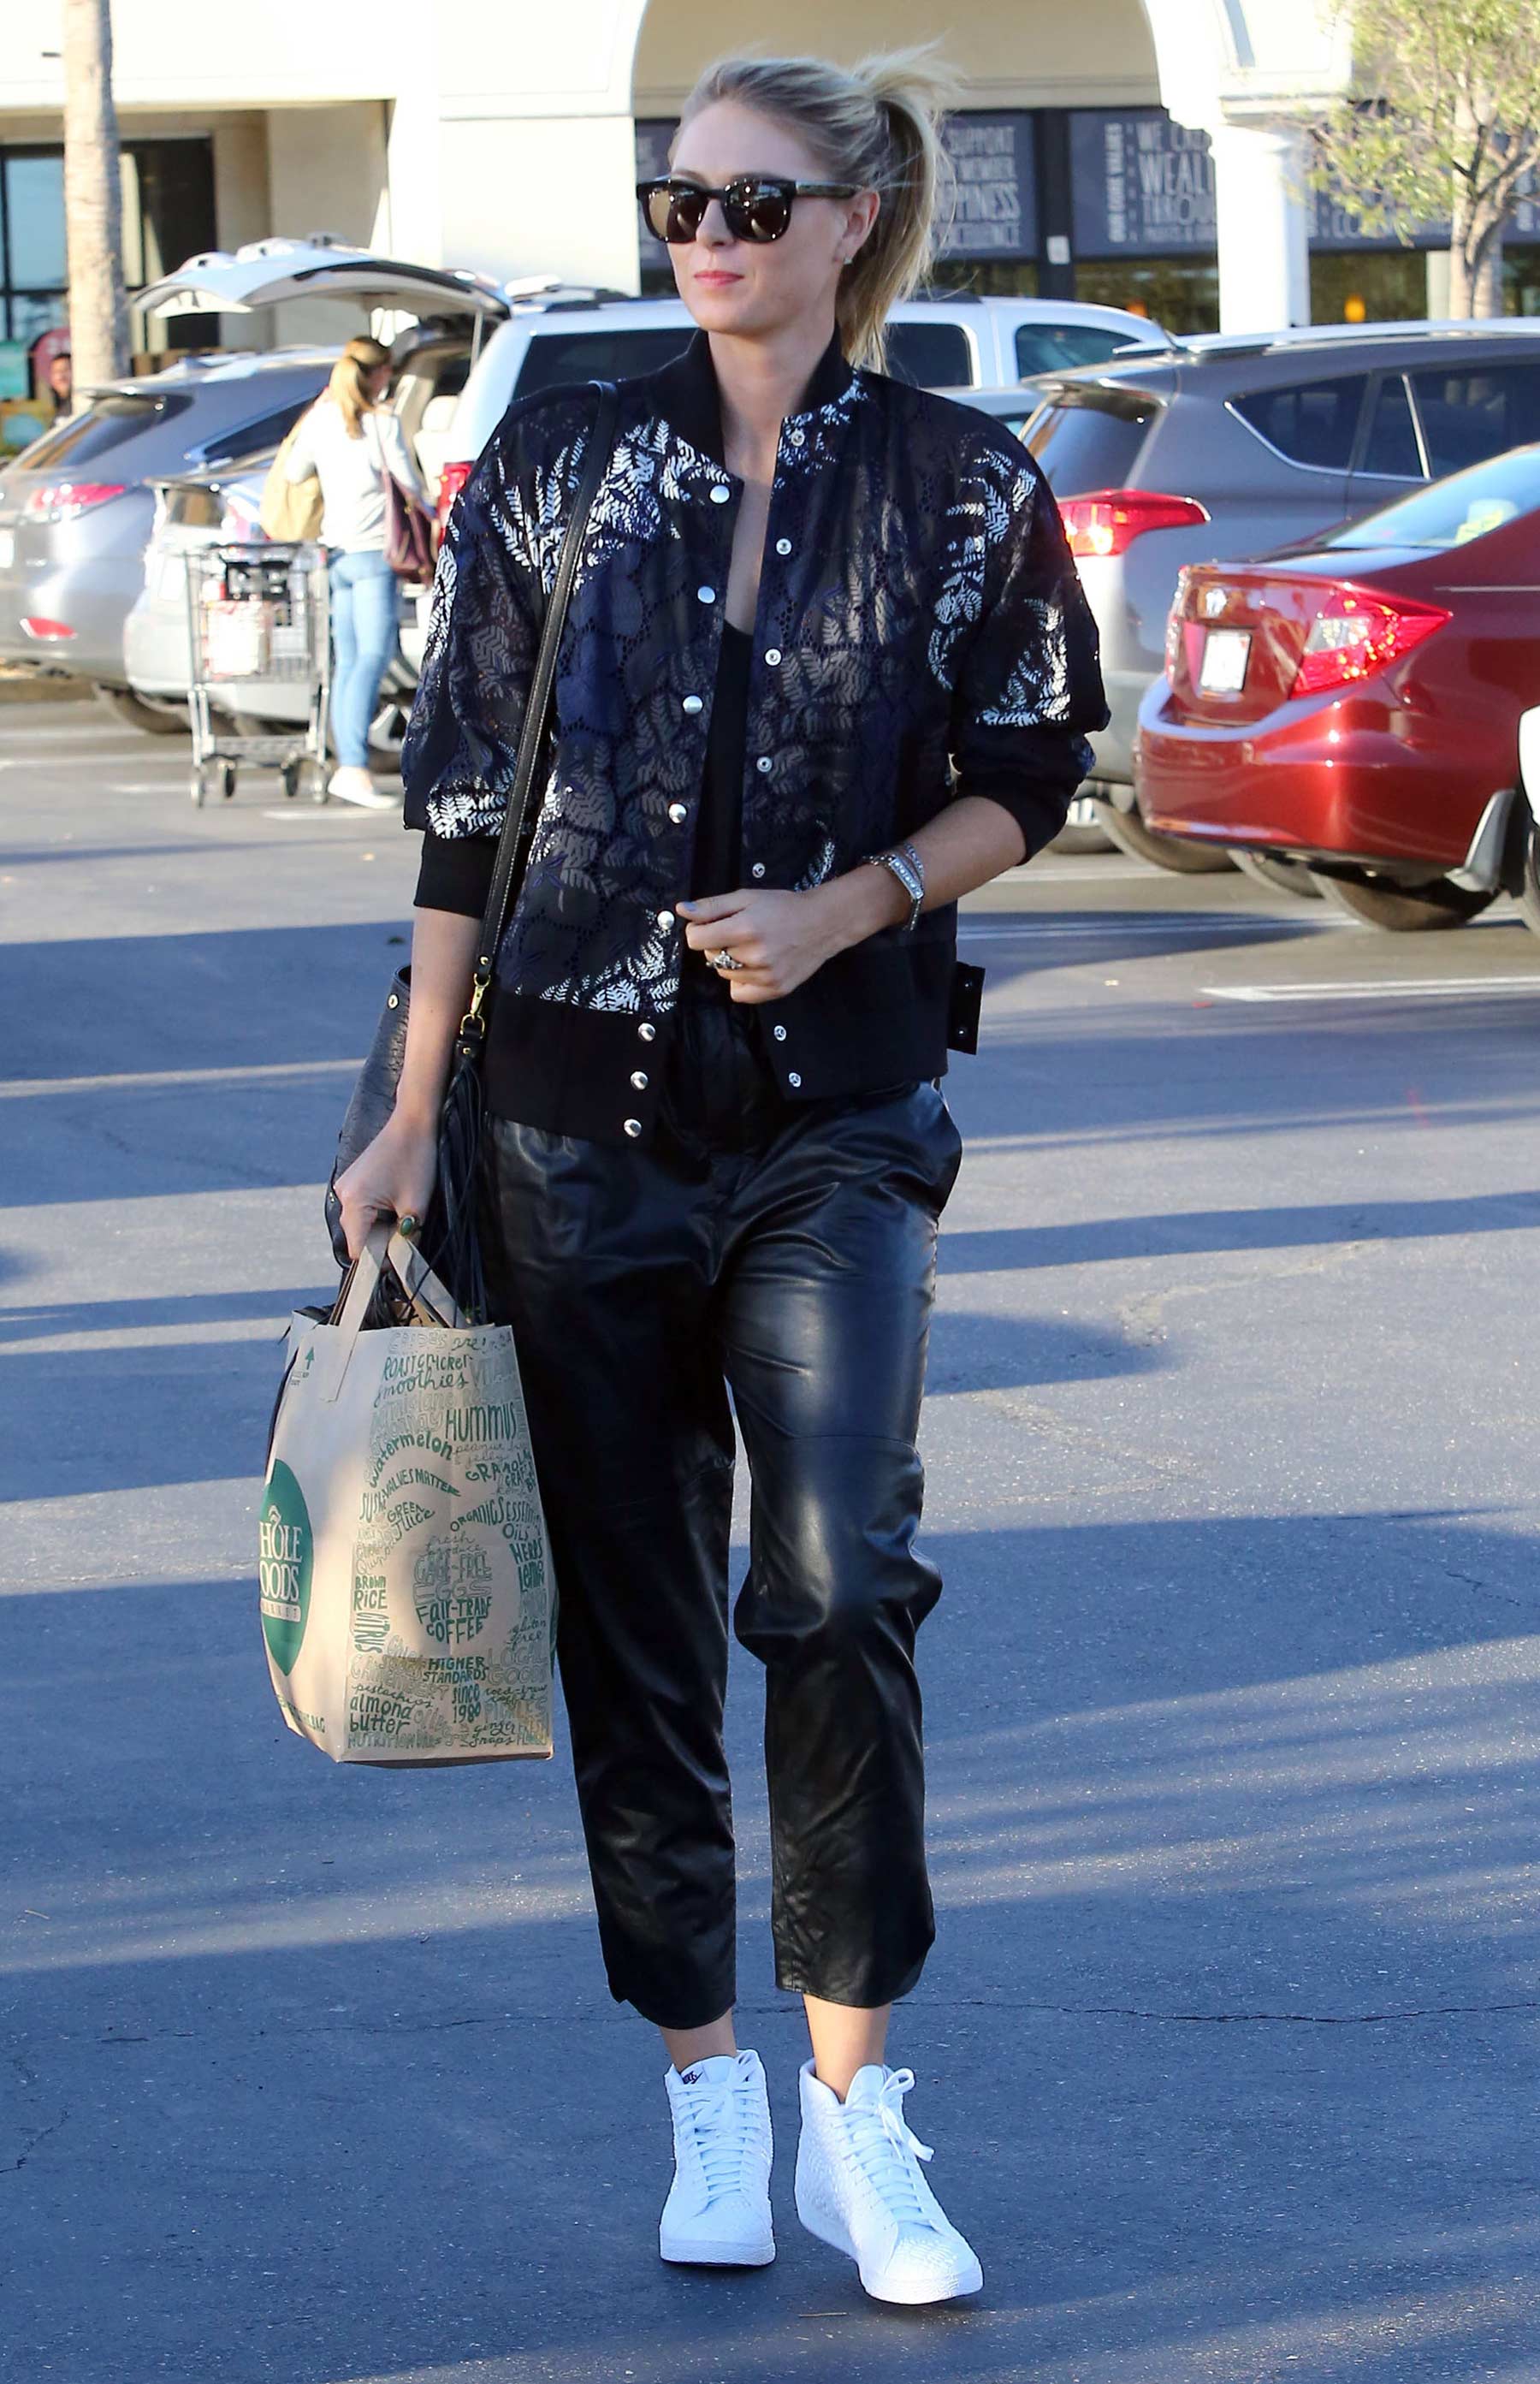 Maria Sharapova out shopping at Whole Foods